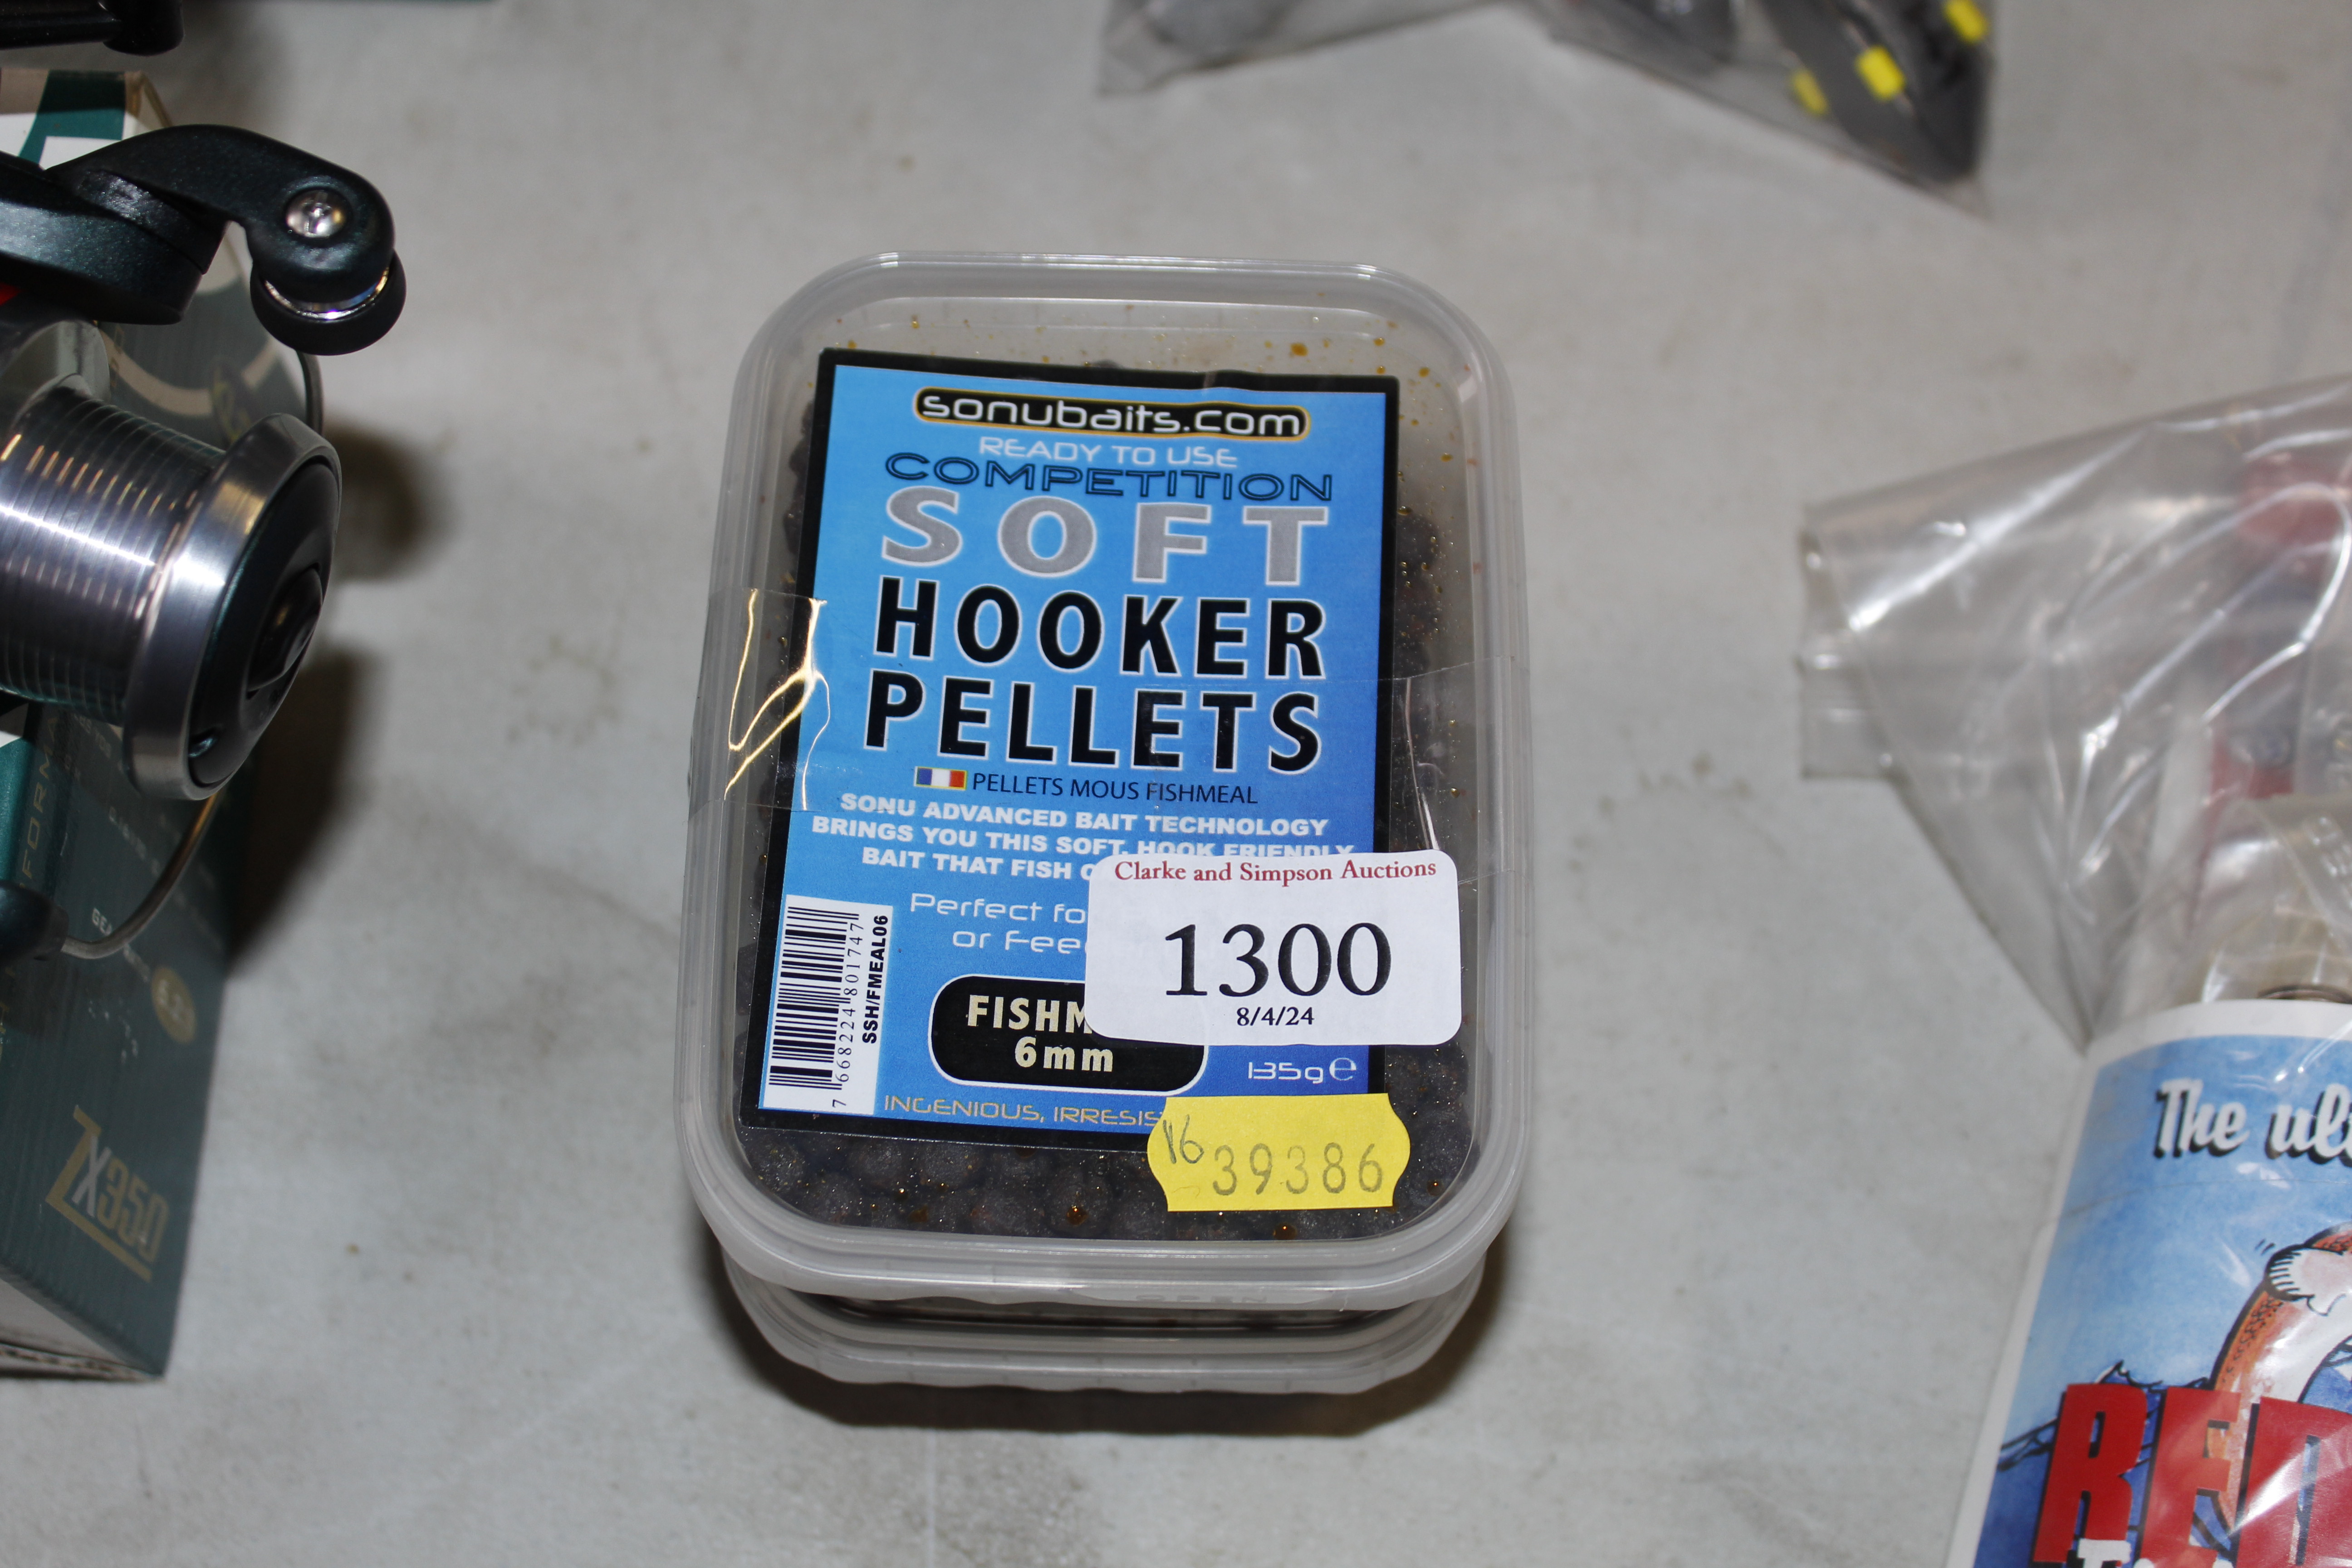 Two tubs of 6mm soft hooker pellets